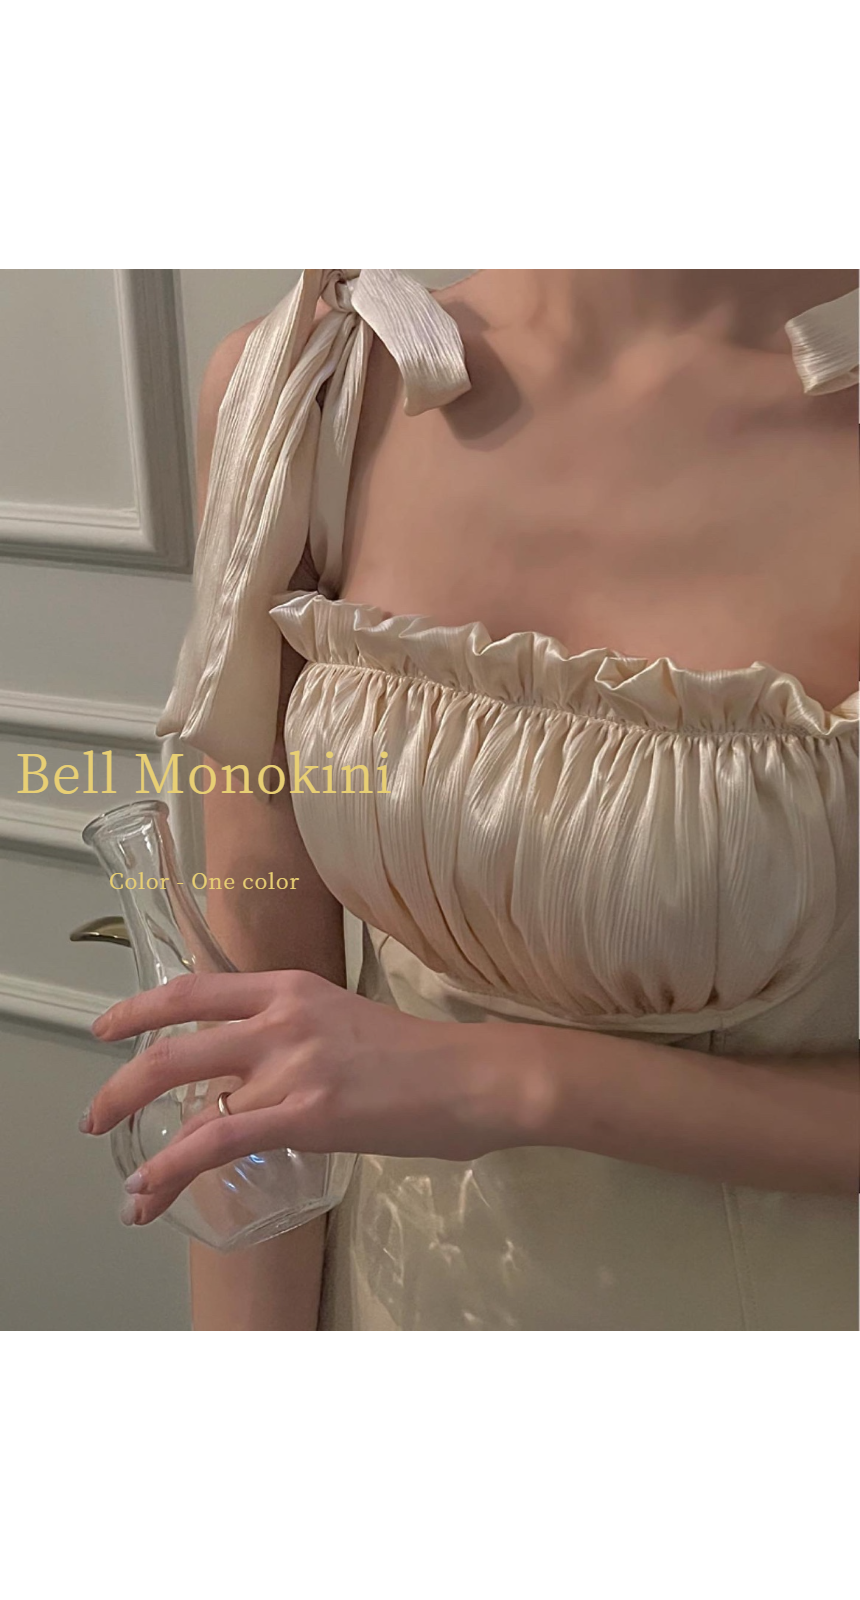 Bell Monokini